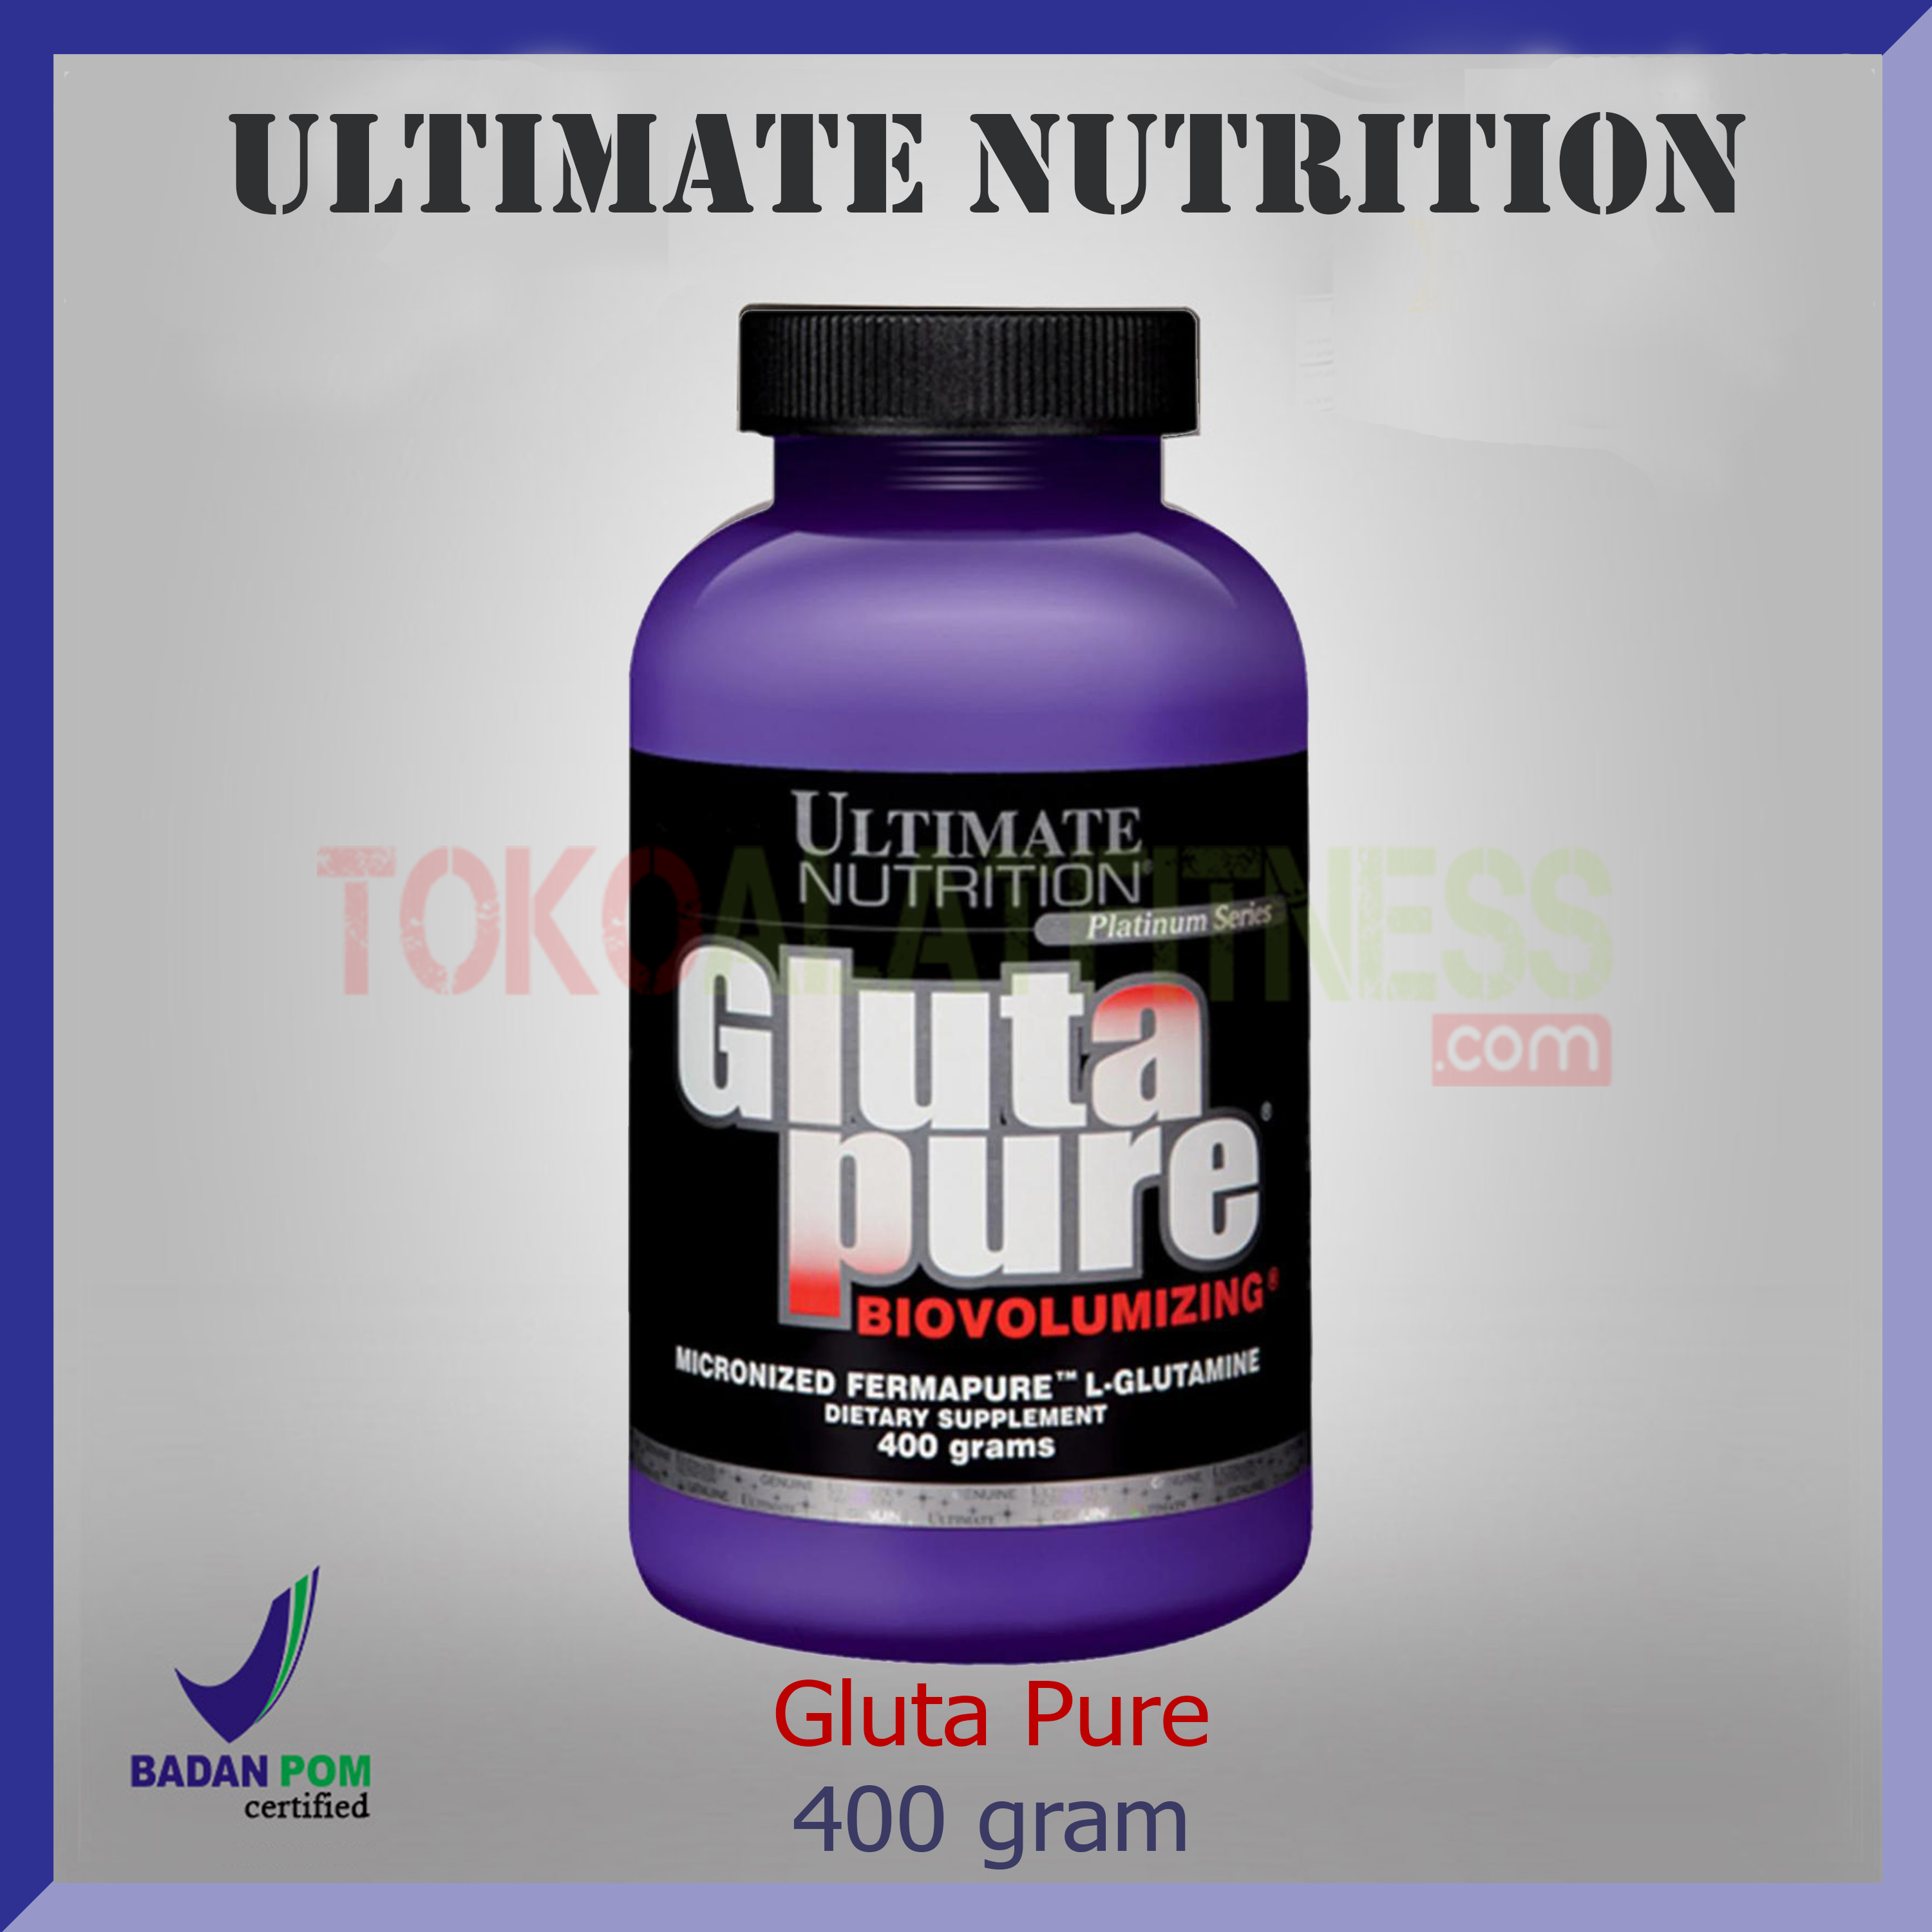 ULTIMATE NUTRITION GLUTA PURE 400 gr - Glutapure Powder 400gr